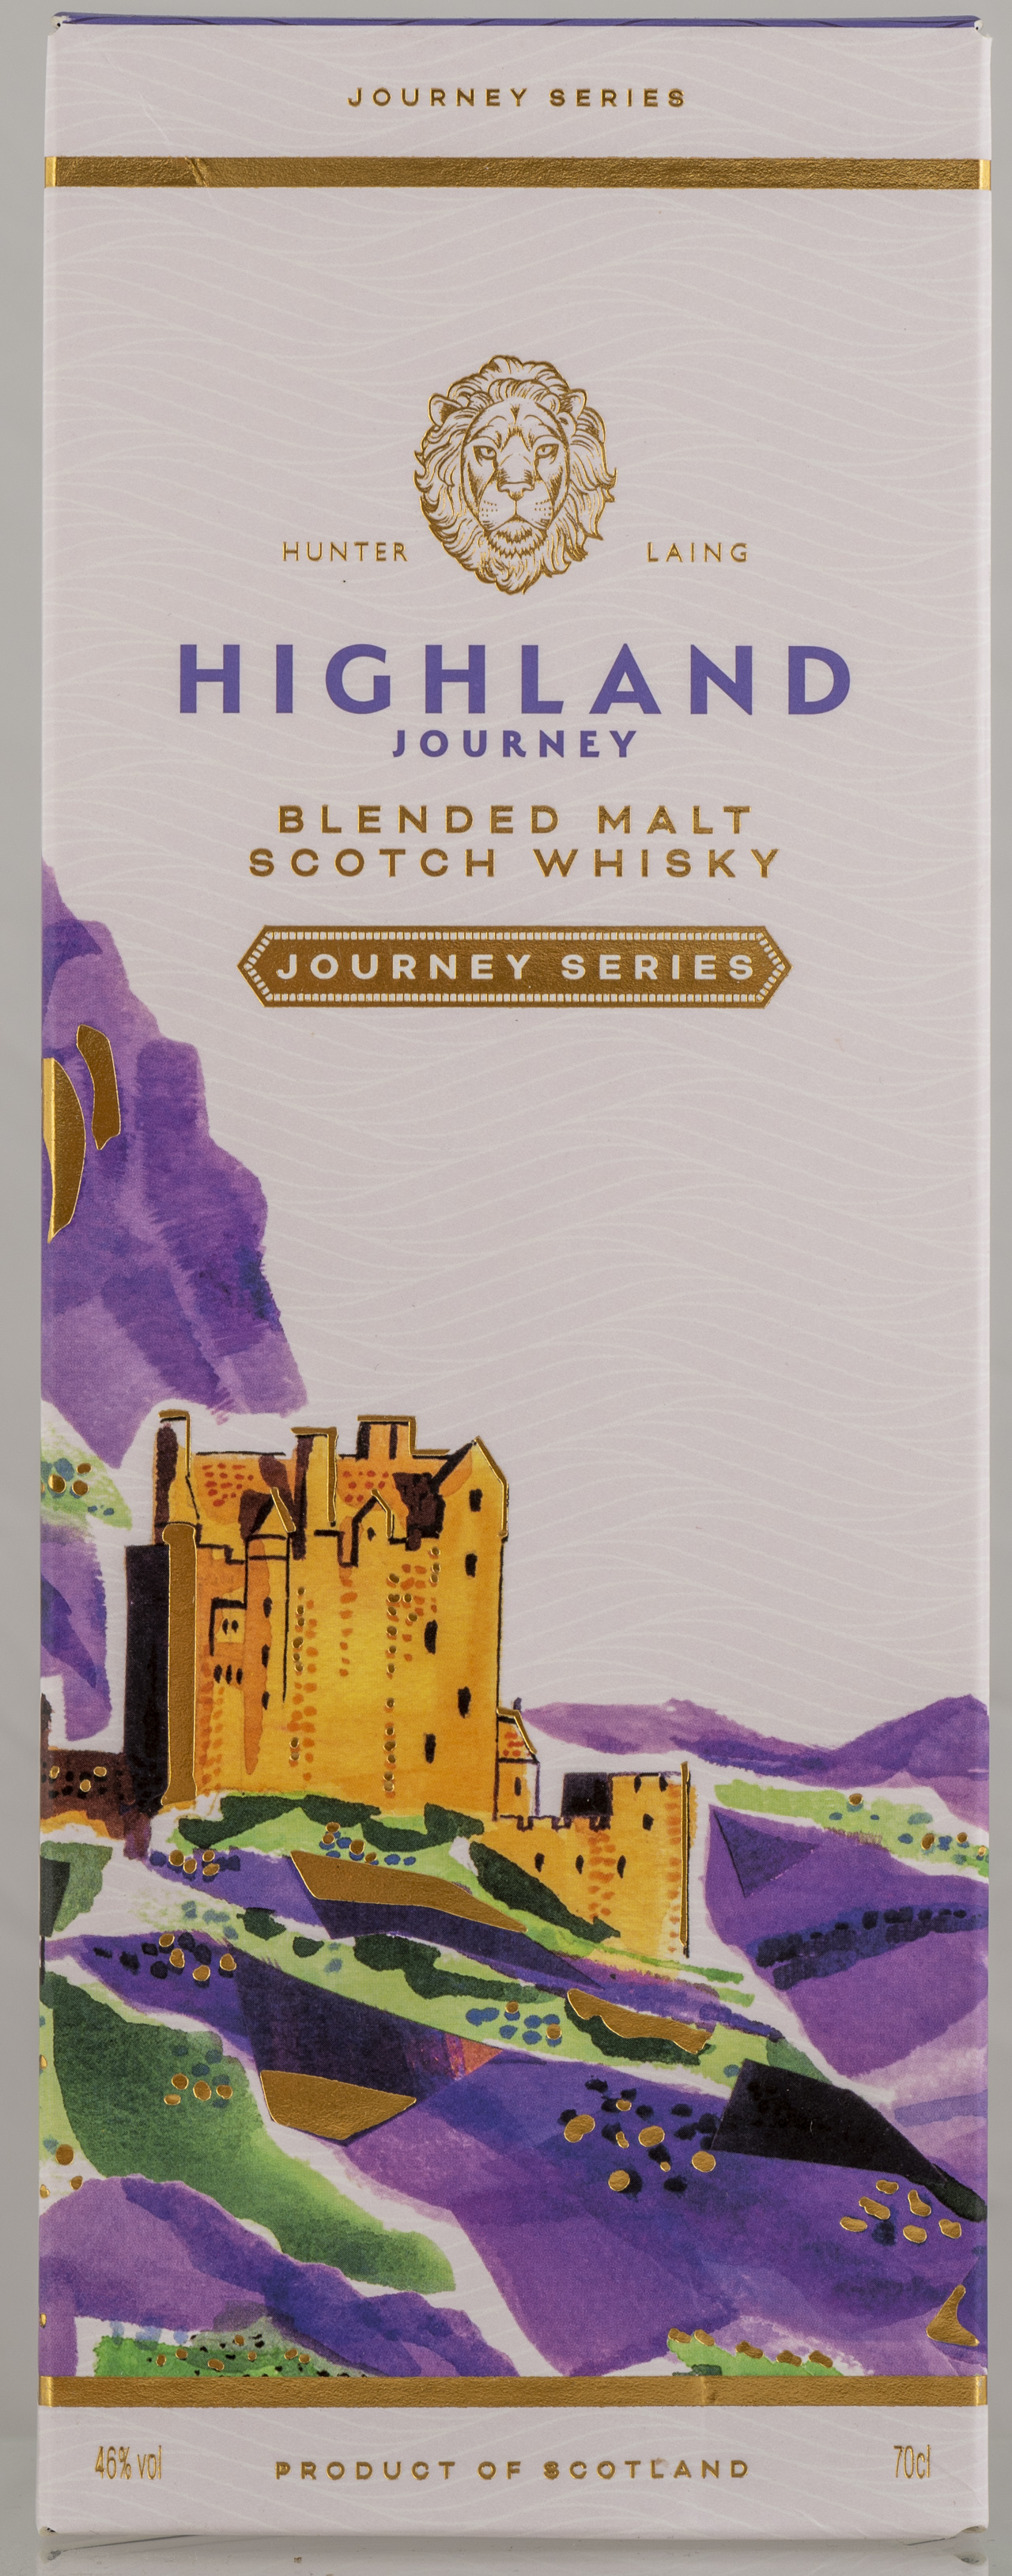 Billede: PHC_7328 - Hunter Laing Highland Journey Blended Malt - box front.jpg